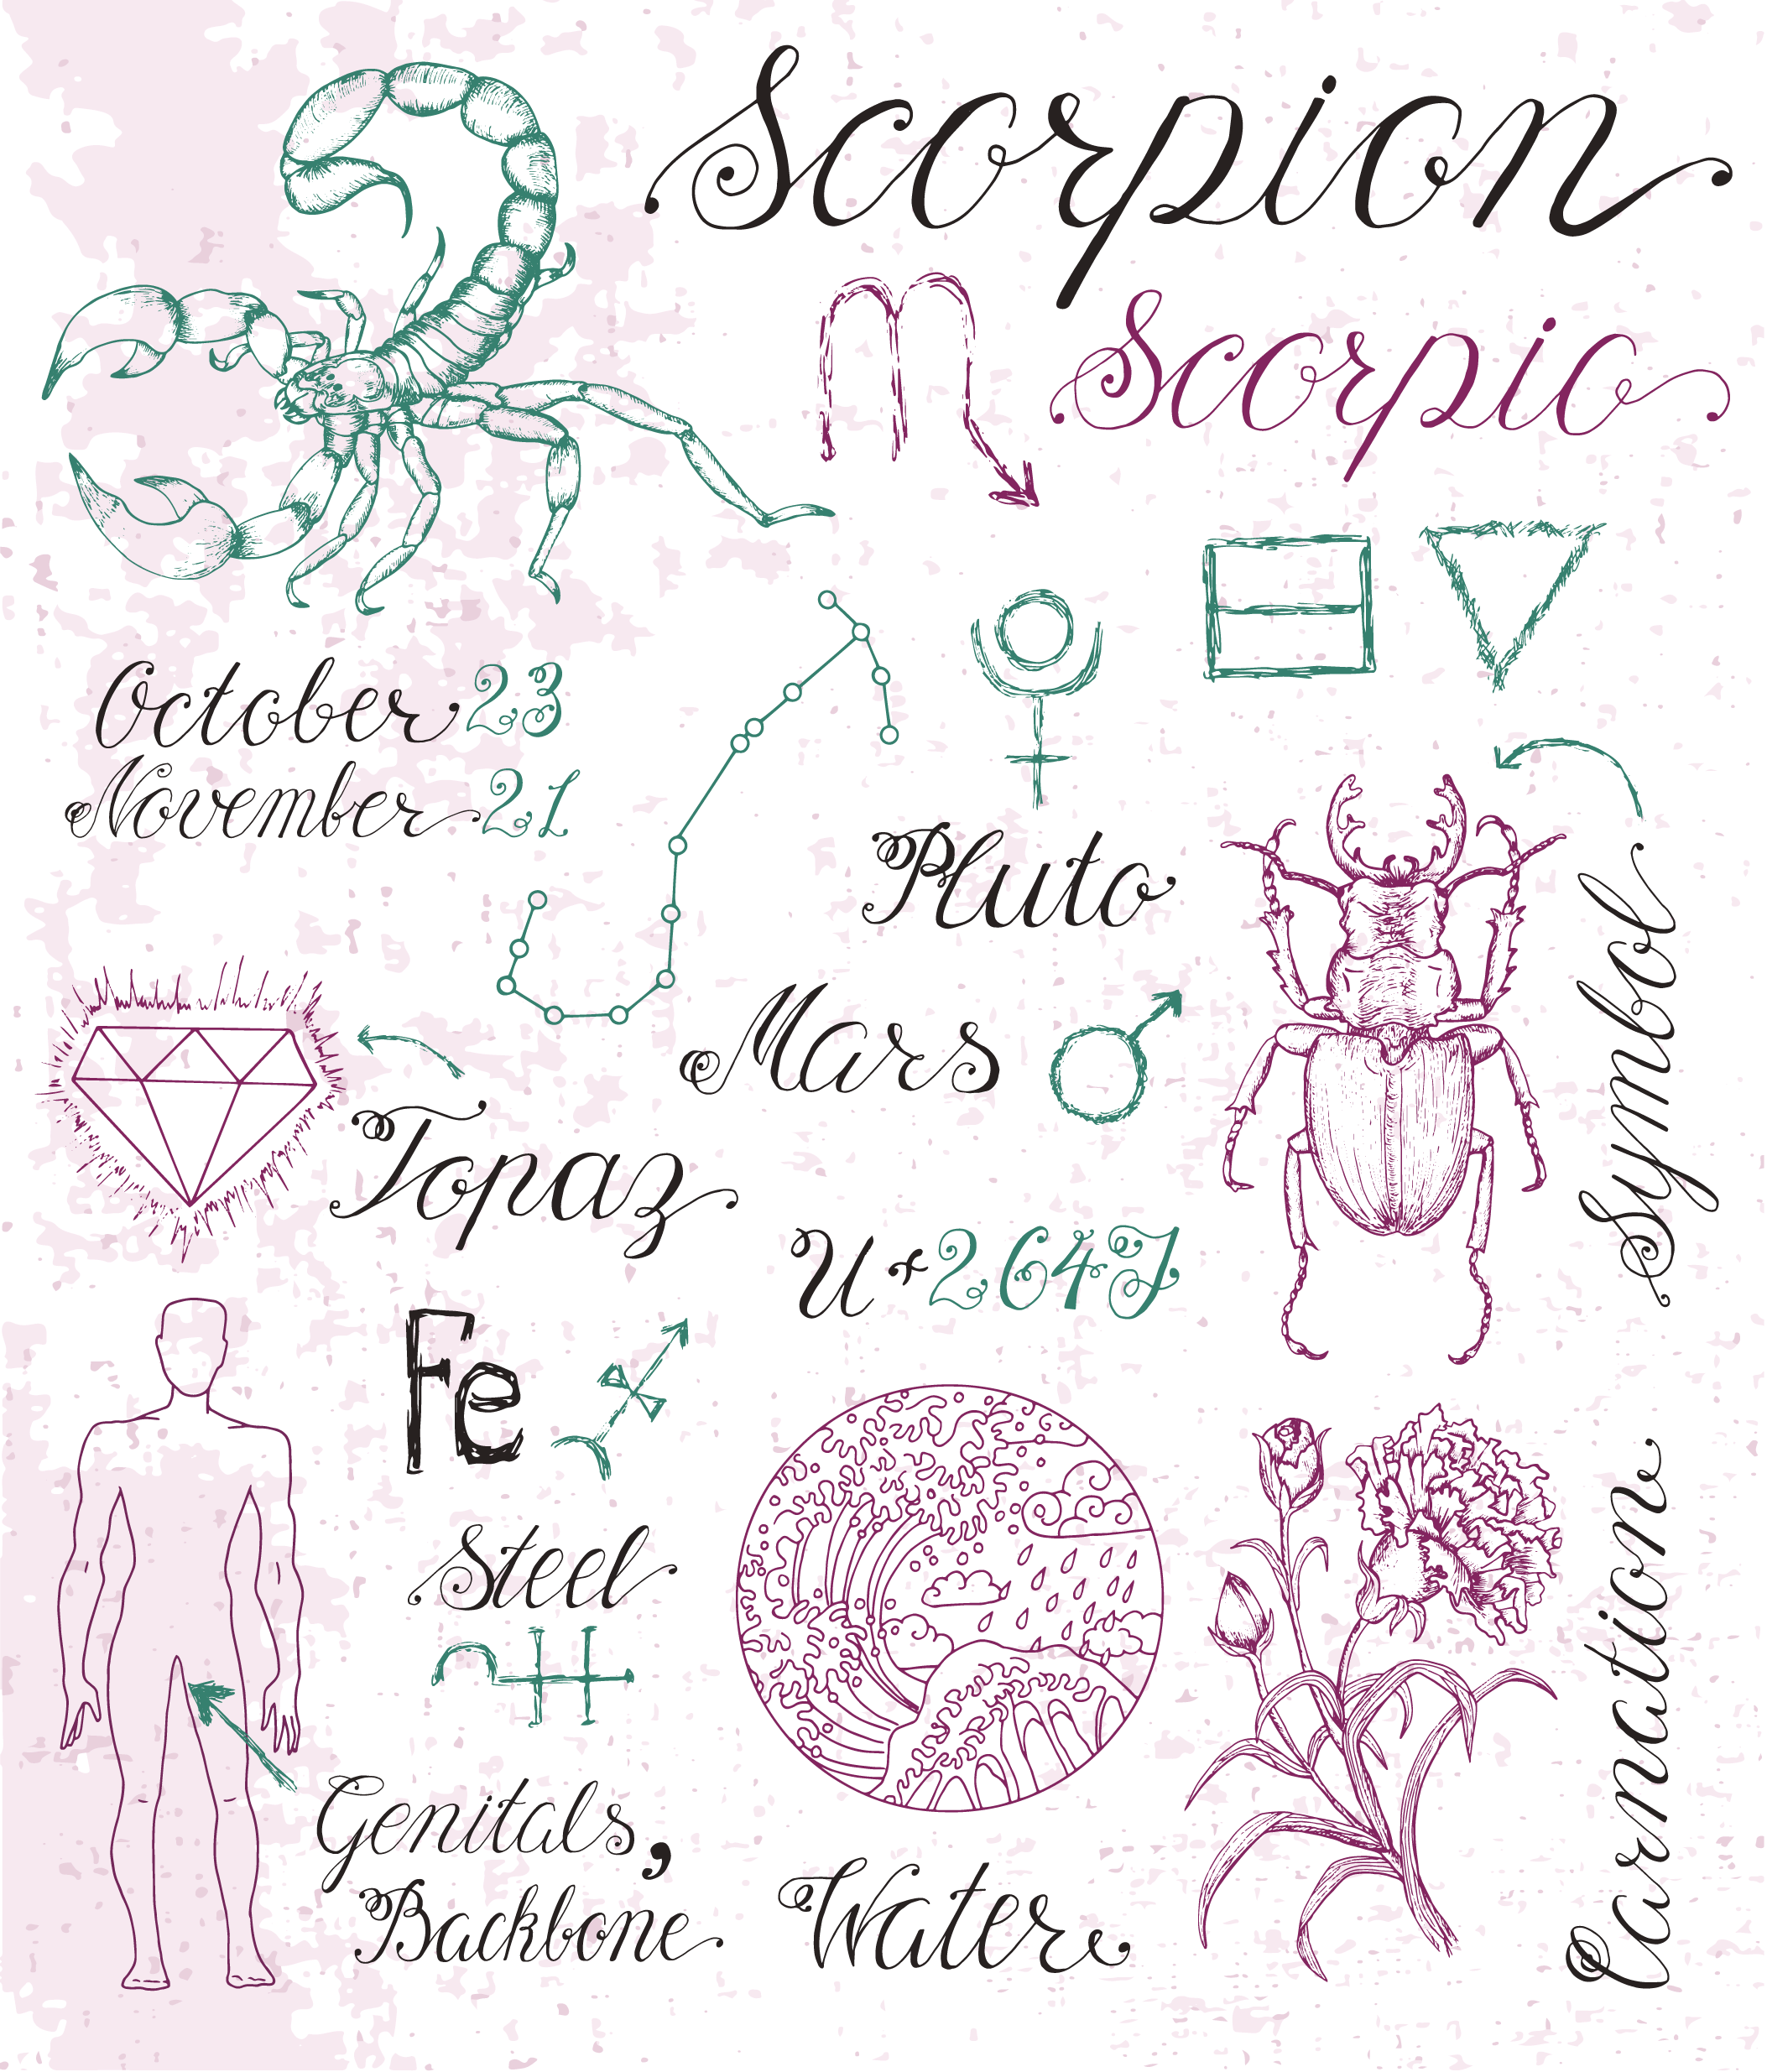 Scorpio's Associations and Symbols